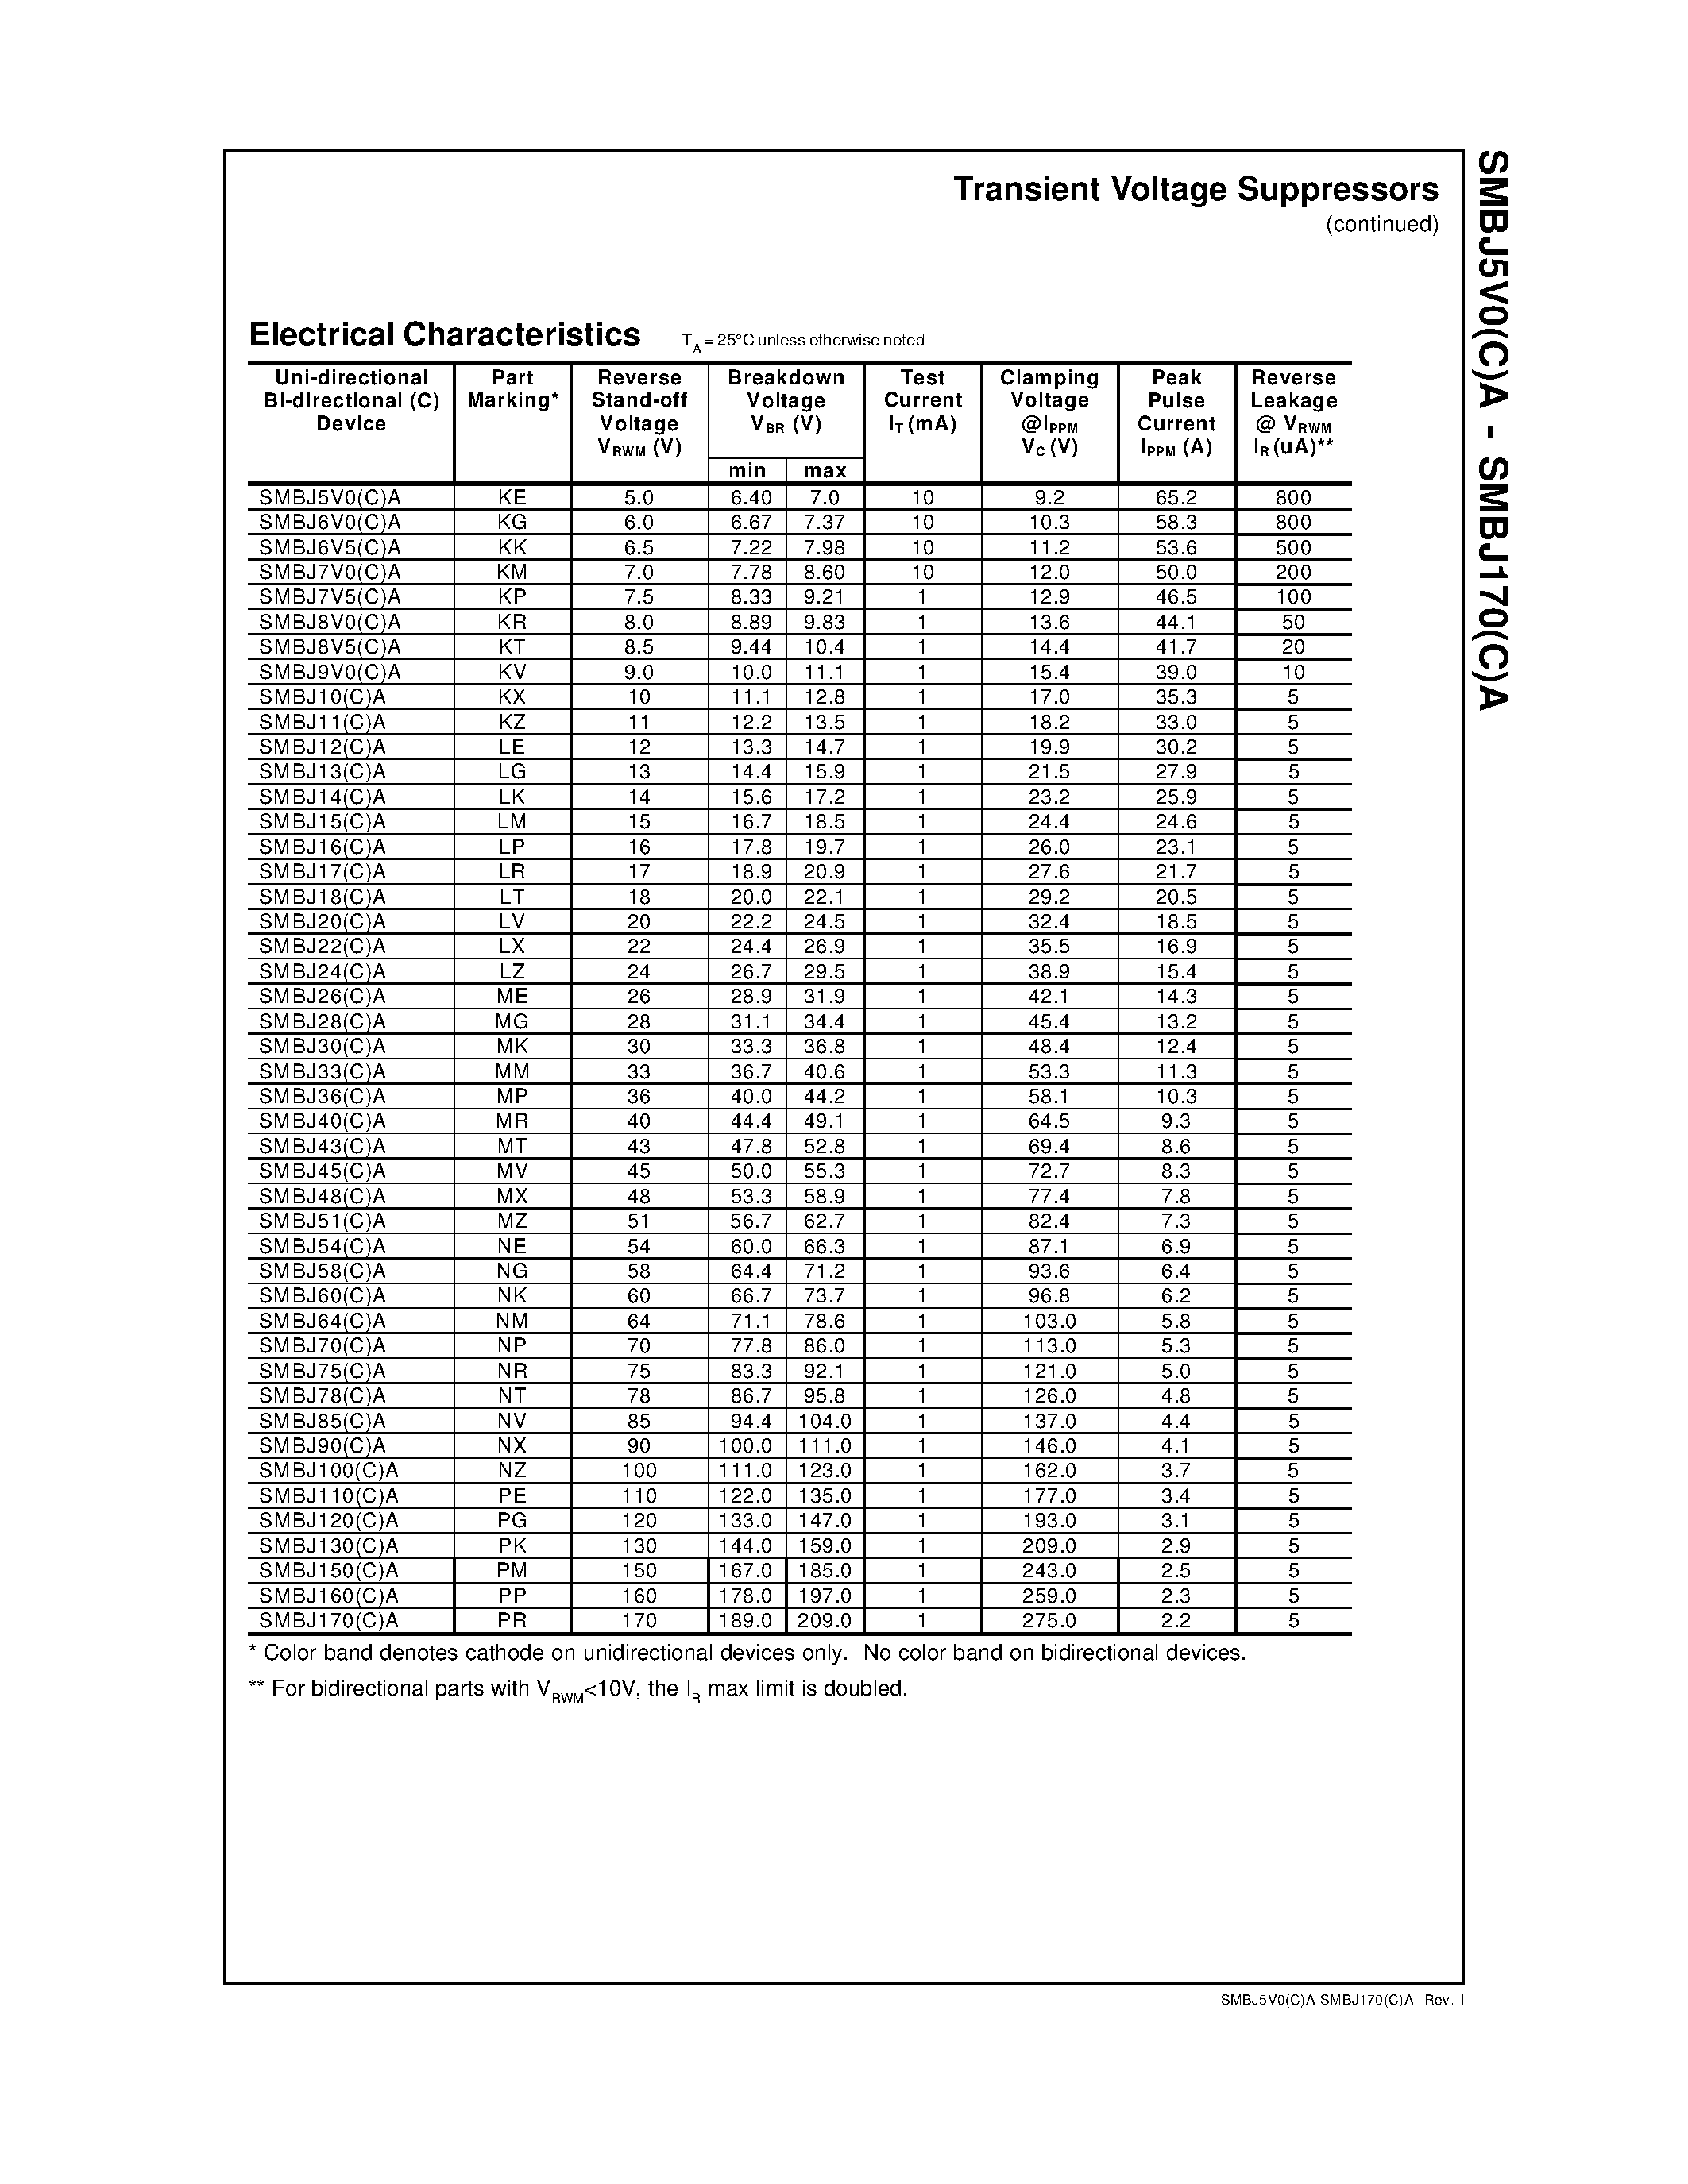 Datasheet SMBJ170A - Transient Voltage Suppressors SMBJ5V0(C)A - SMBJ170(C)A page 2